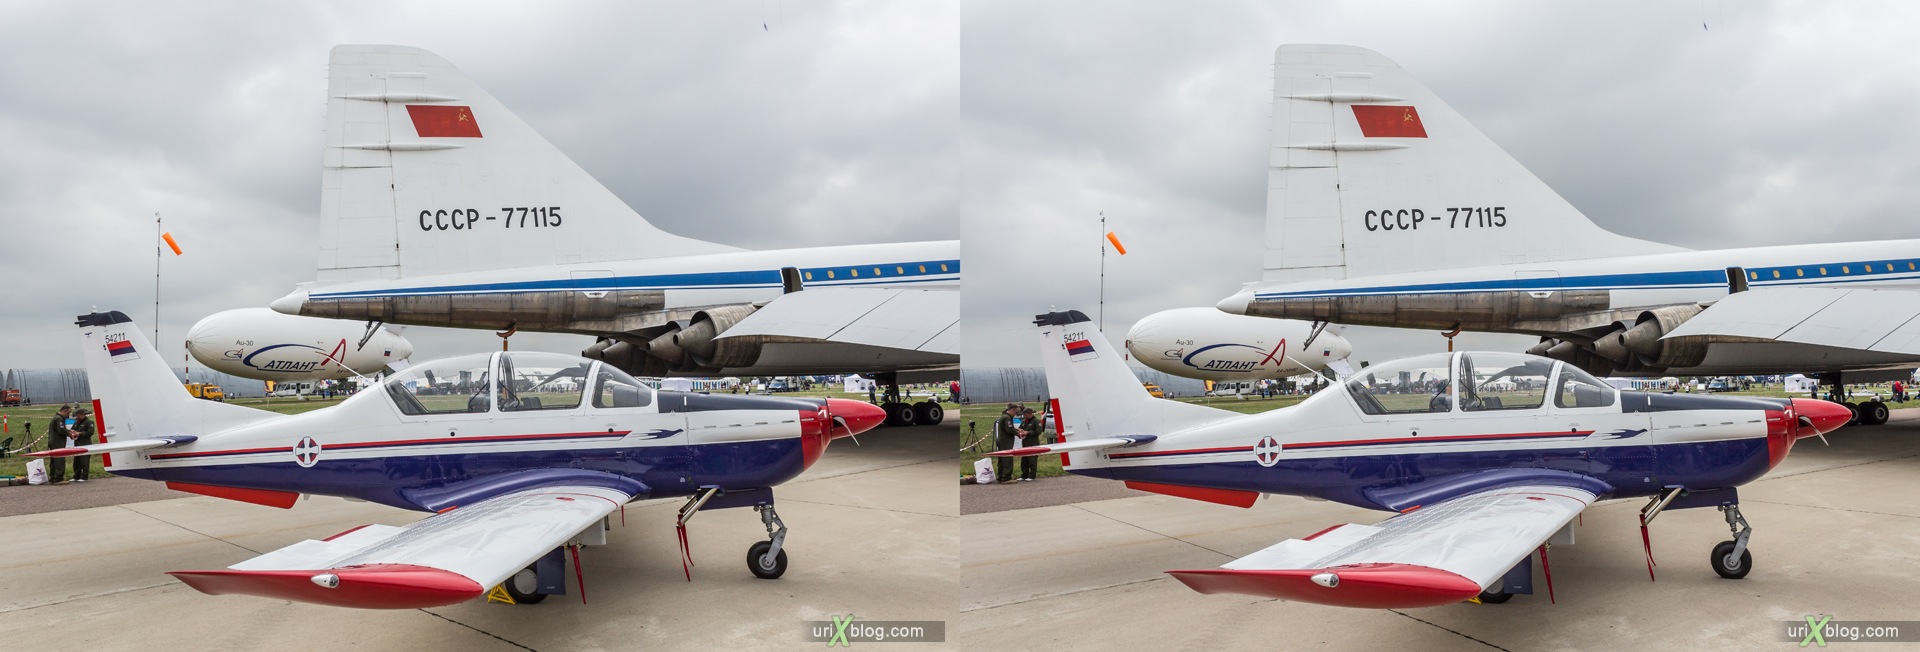 2013, Lasta-95, MAKS, International Aviation and Space Salon, Russia, Ramenskoye airfield, airplane, 3D, stereo pair, cross-eyed, crossview, cross view stereo pair, stereoscopic